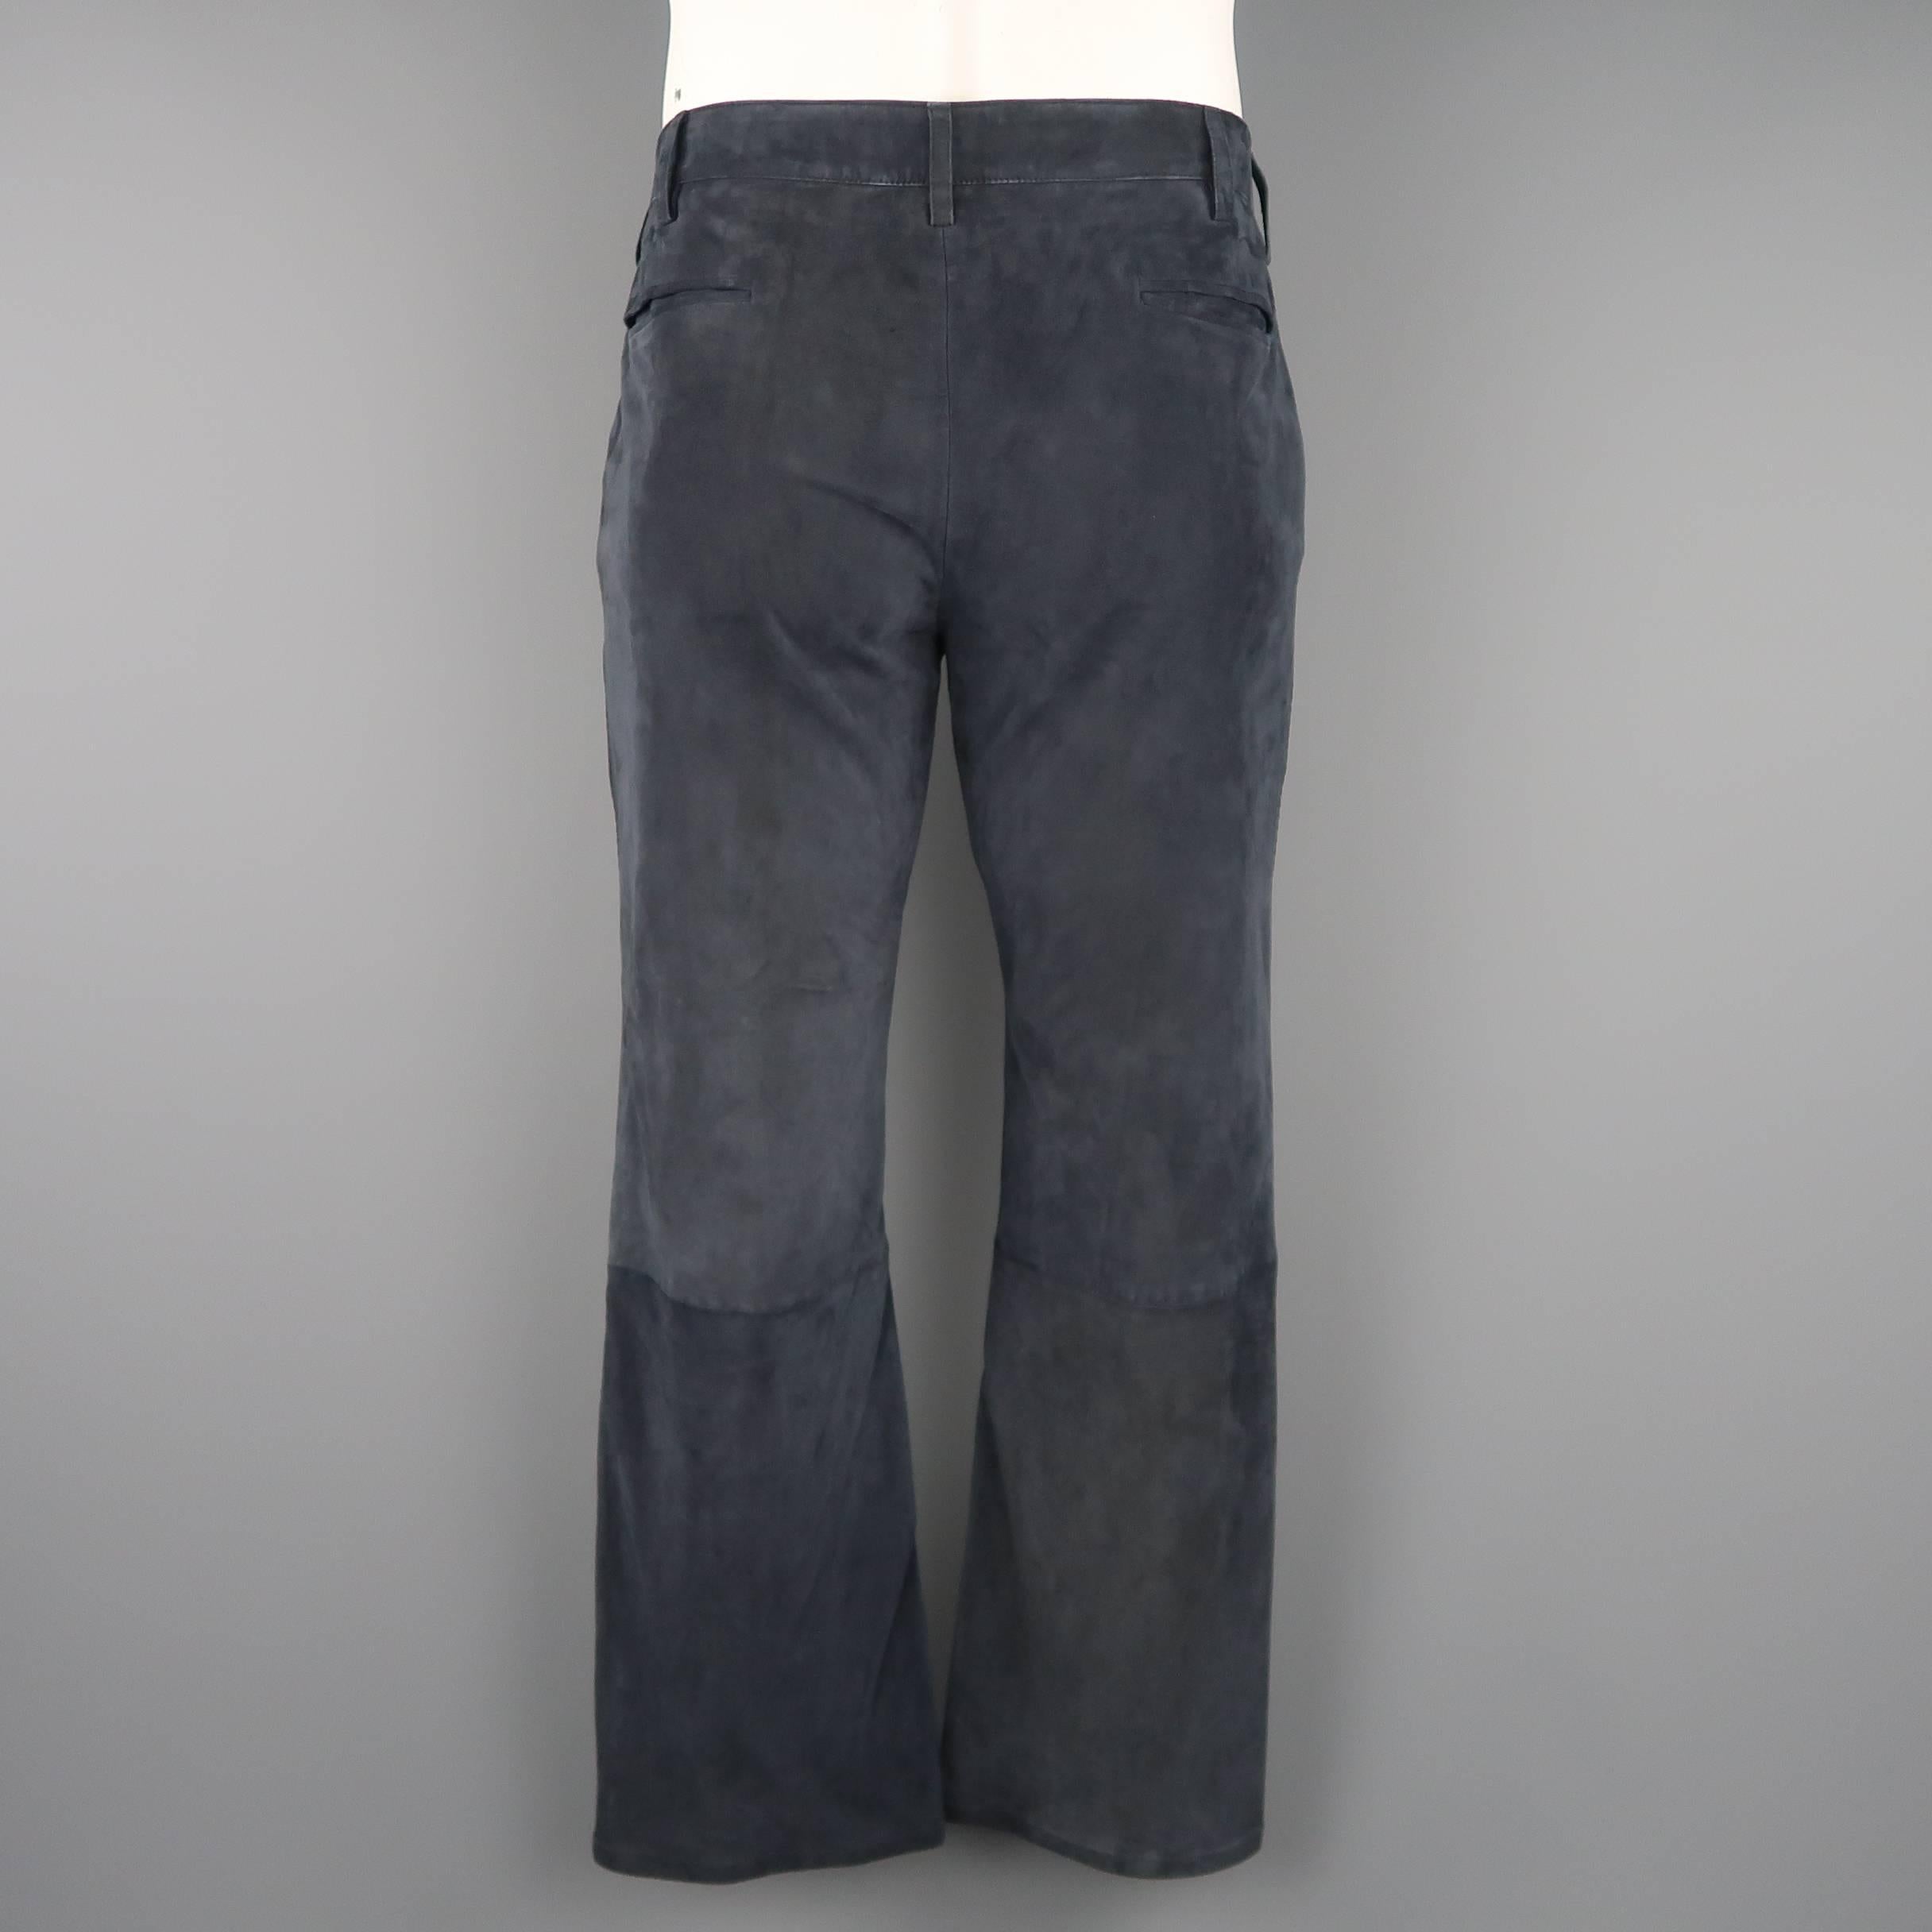 Men's JOHN VARVATOS Size 32 Navy Blue Suede Top Stitch Trim Casual Pants 1